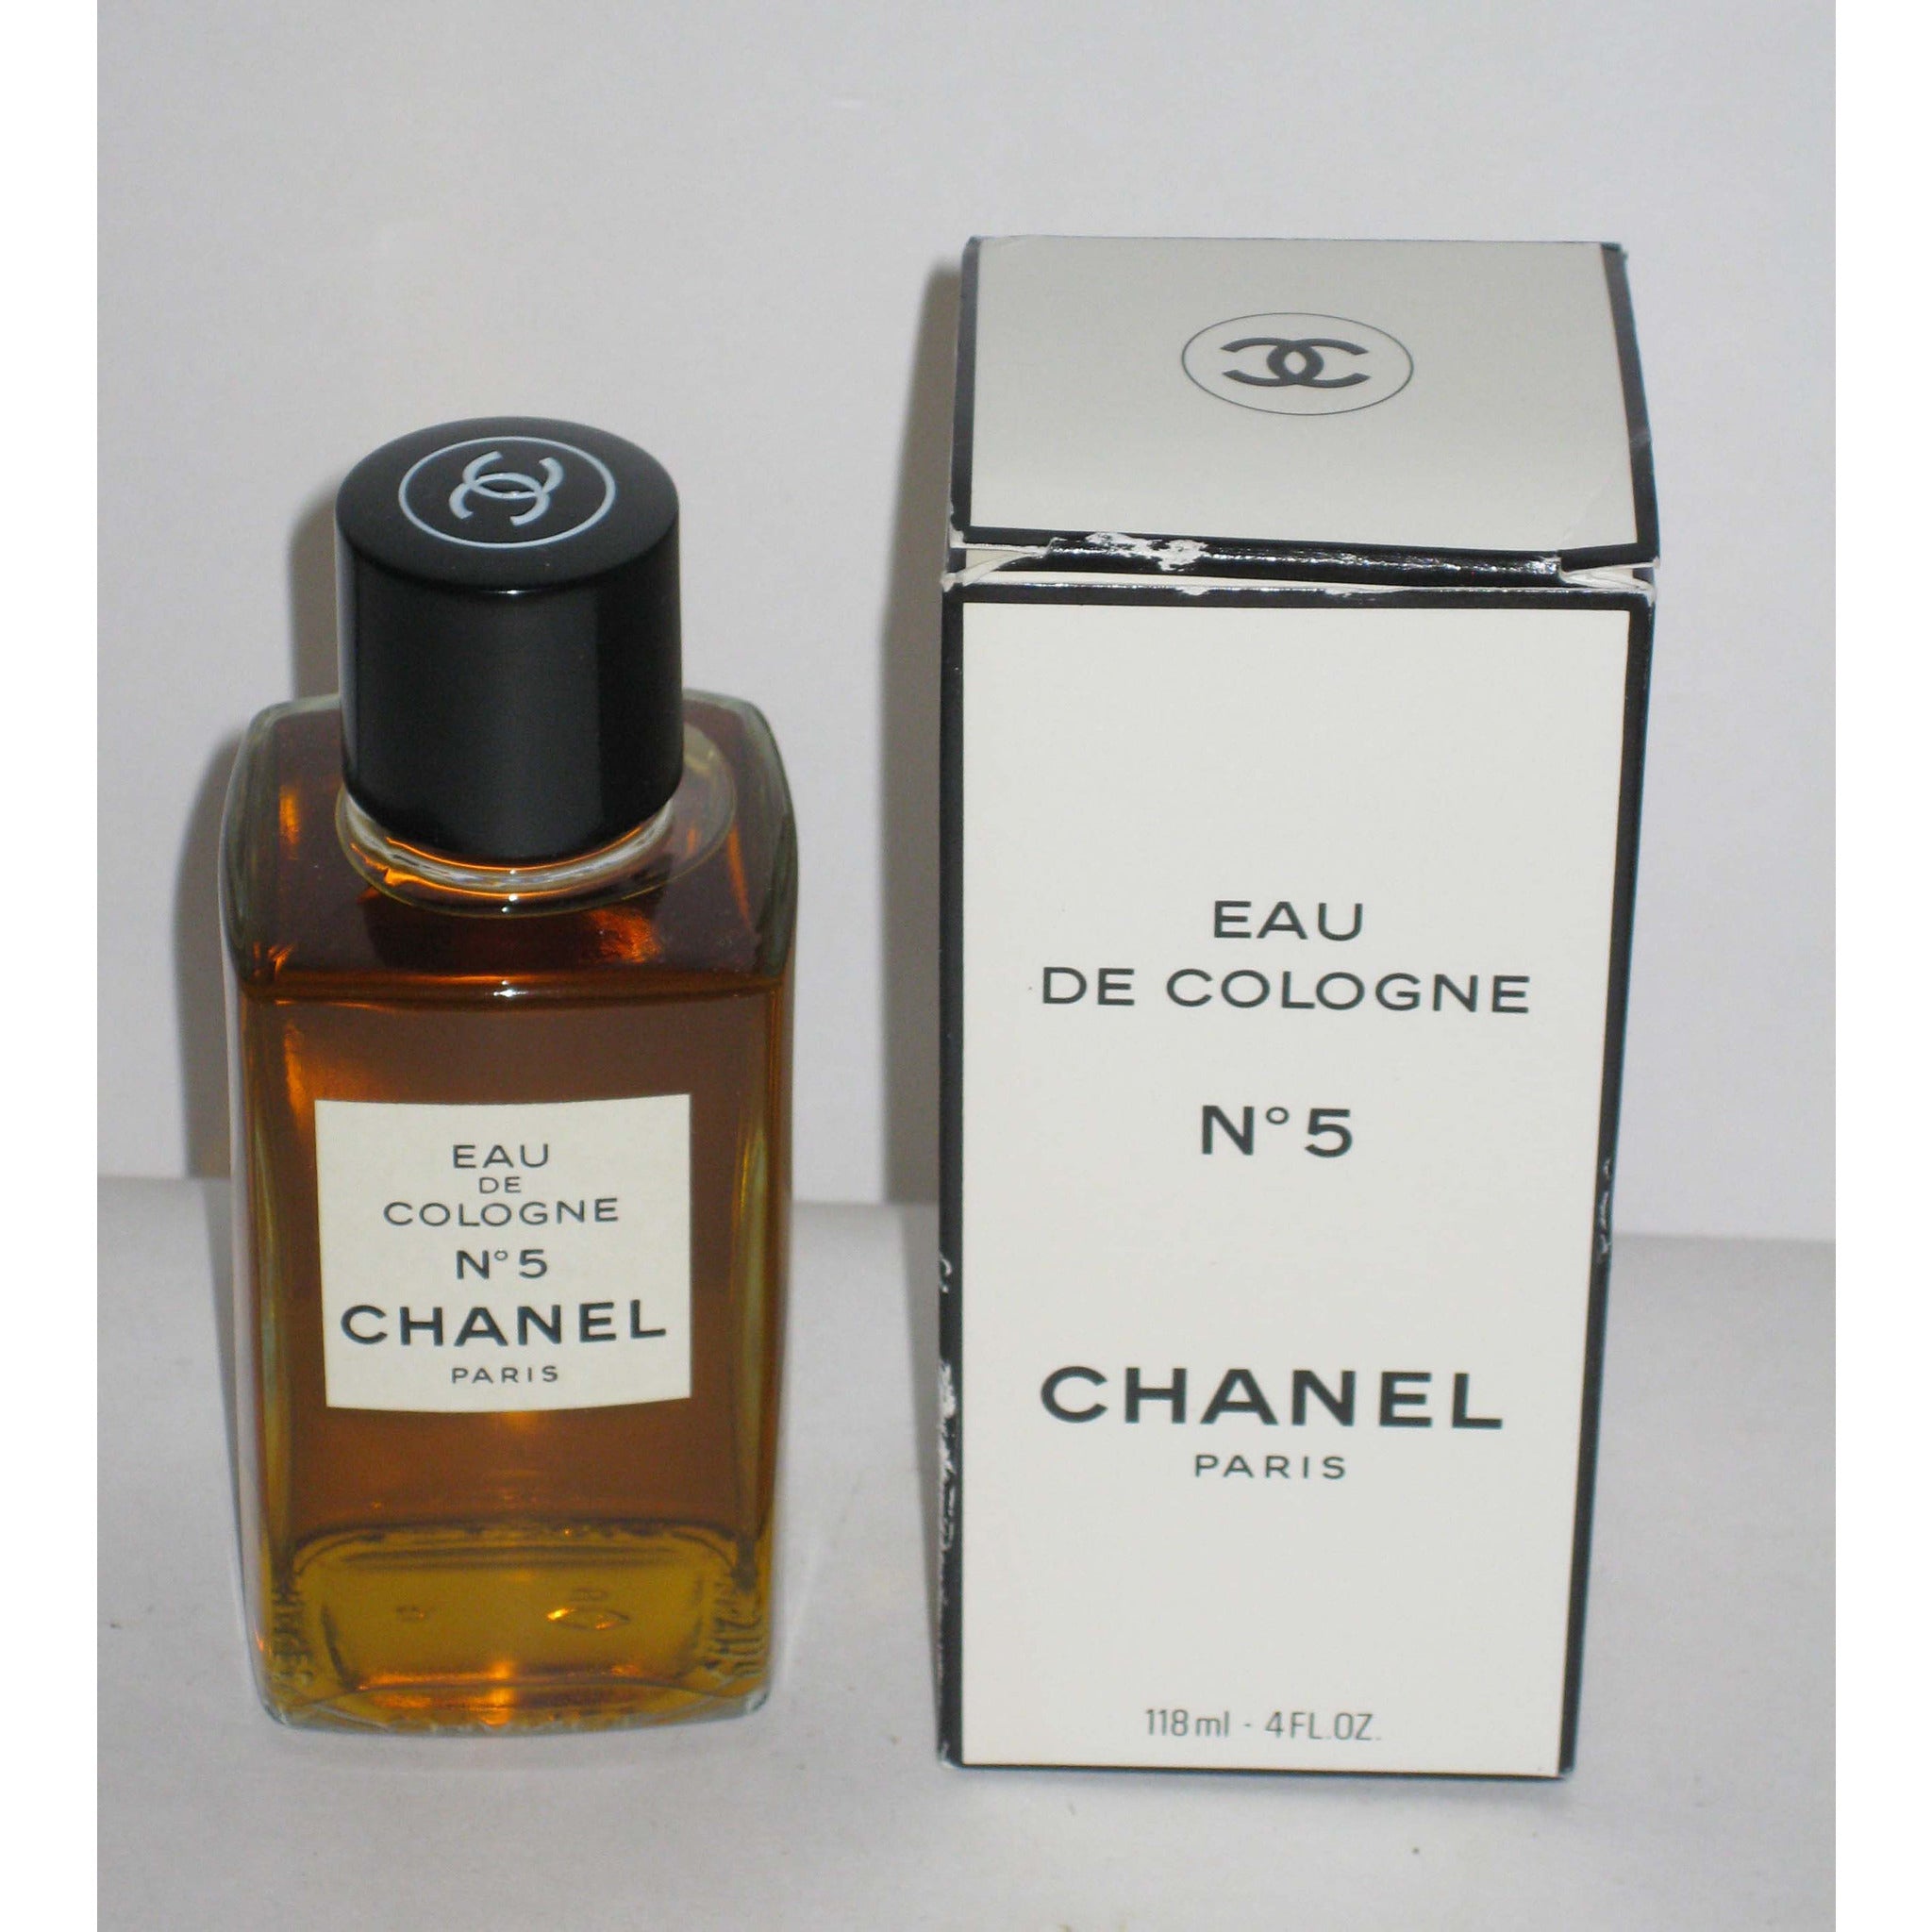 Chanel No 5 Eau Cologne – Quirky Finds